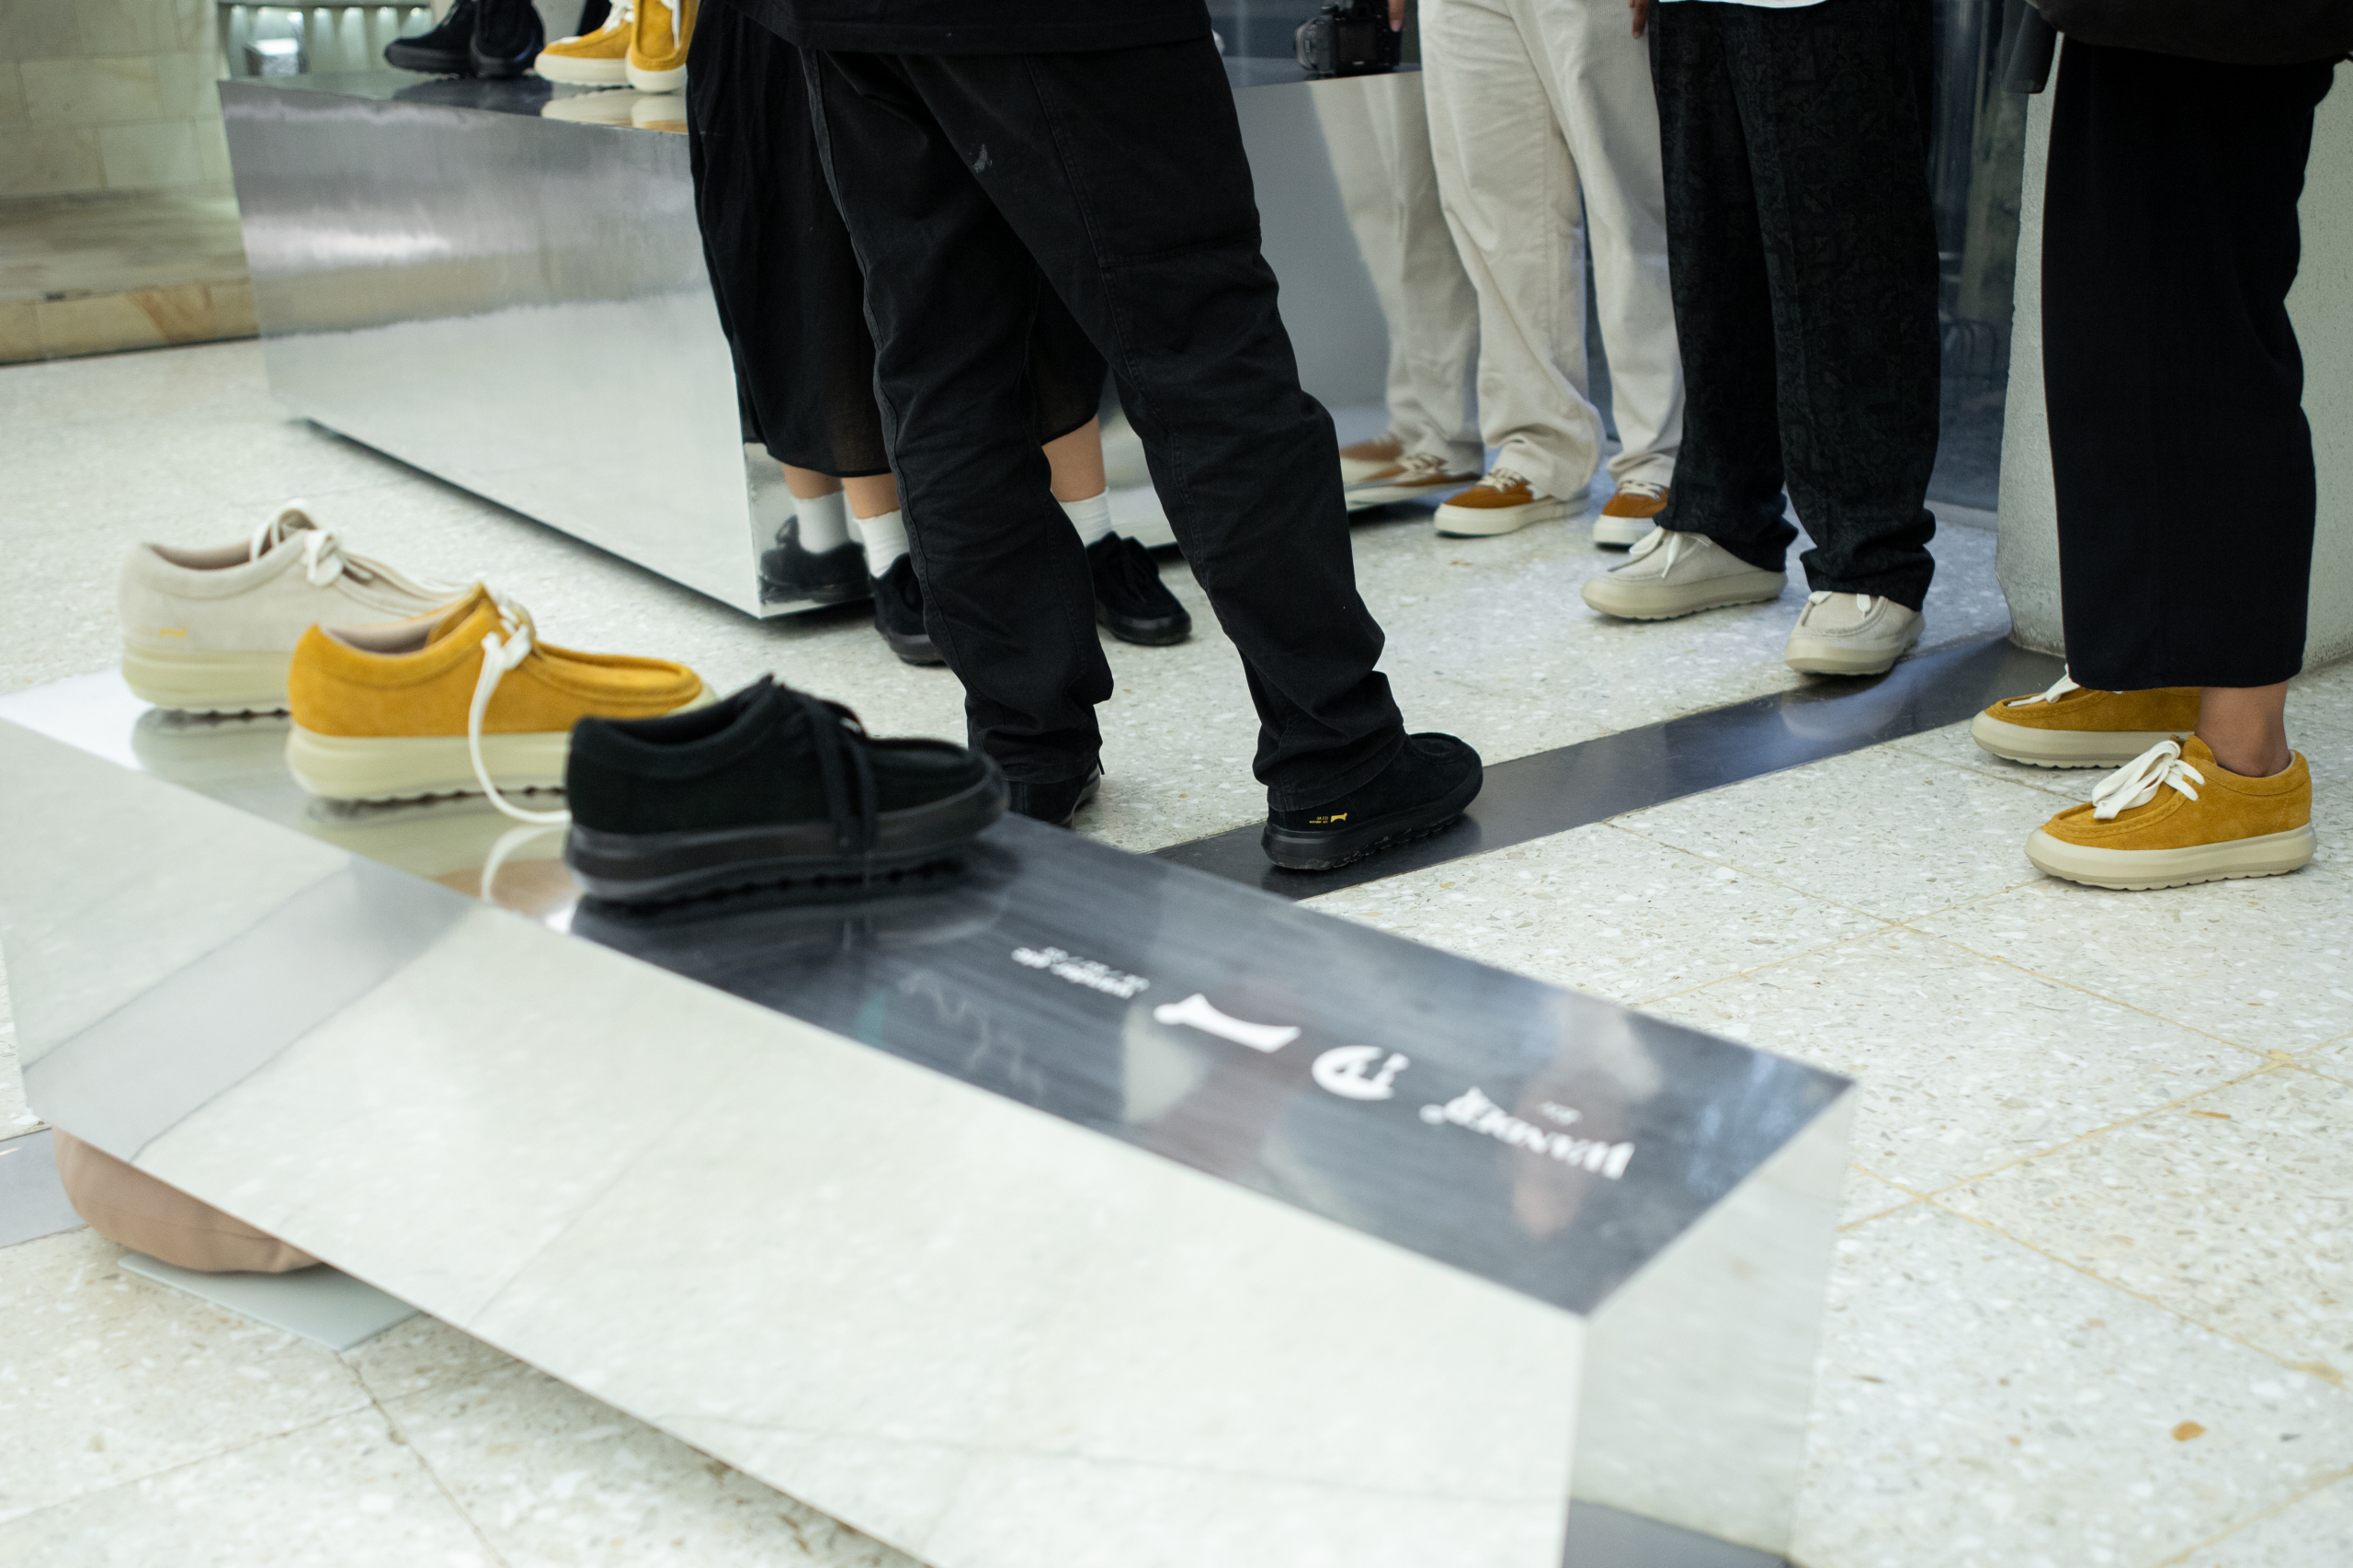 WANDER Hosts Immersive Exhibition Debuting FD/08 Footwear Collection